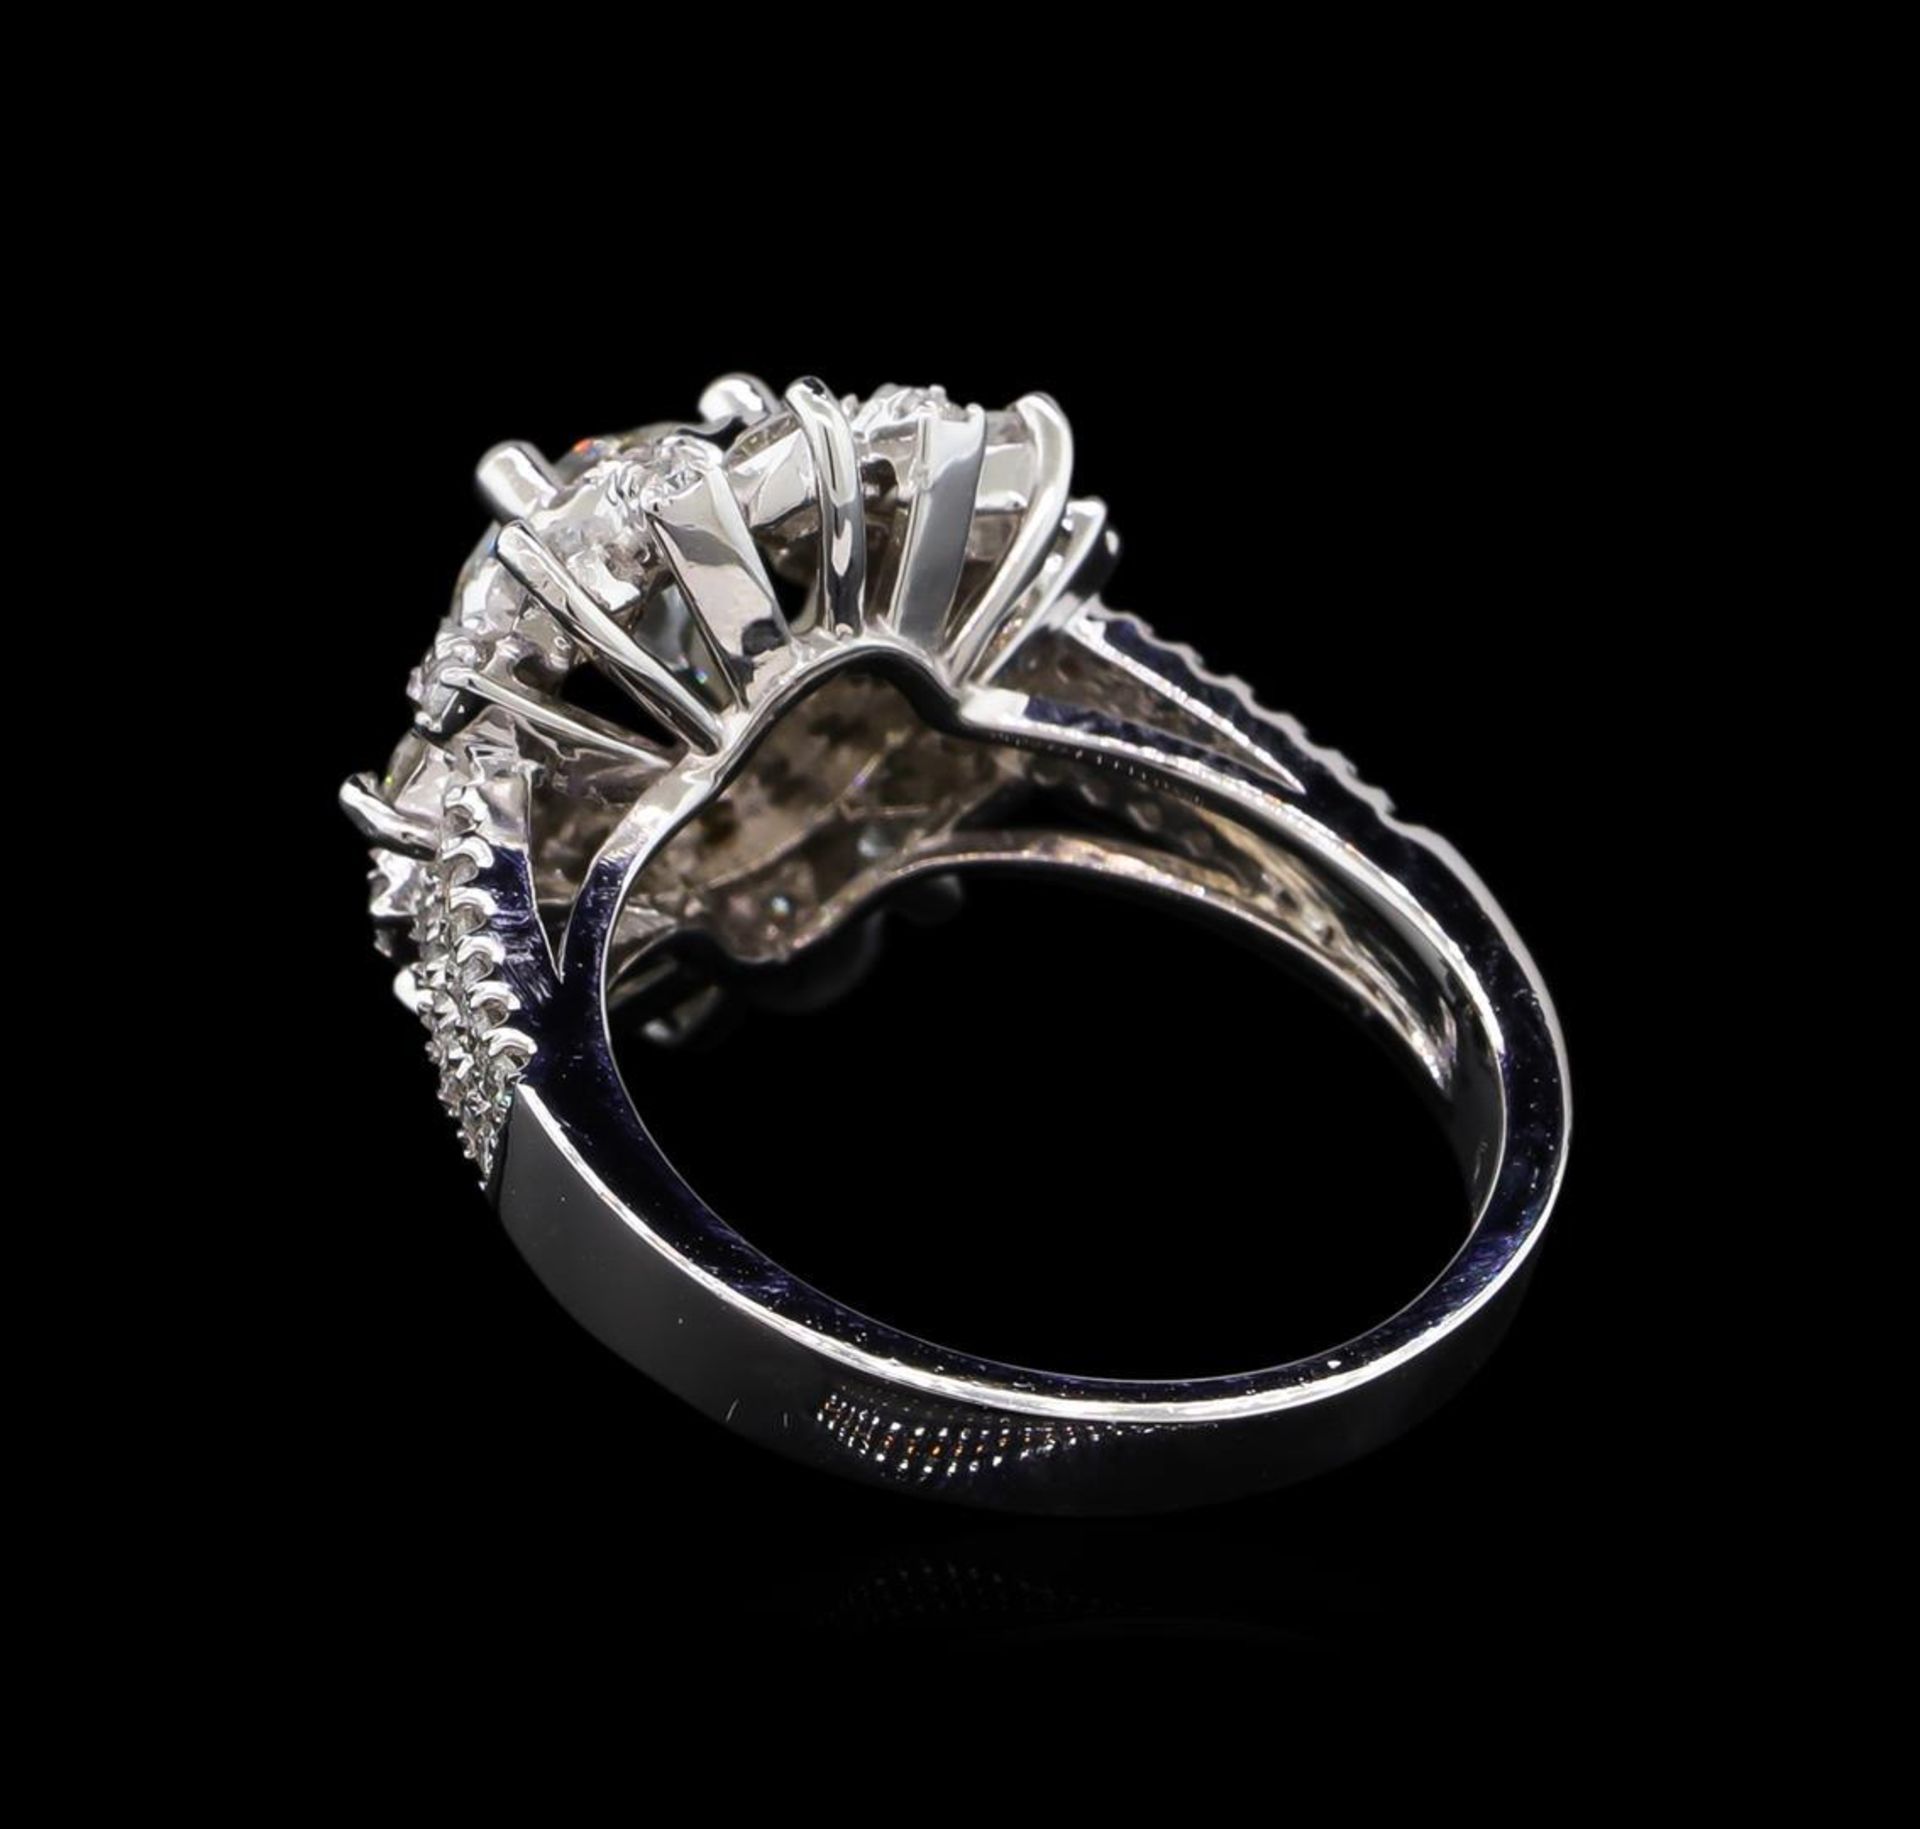 2.40 ctw Diamond Ring - 14KT White Gold - Image 3 of 5